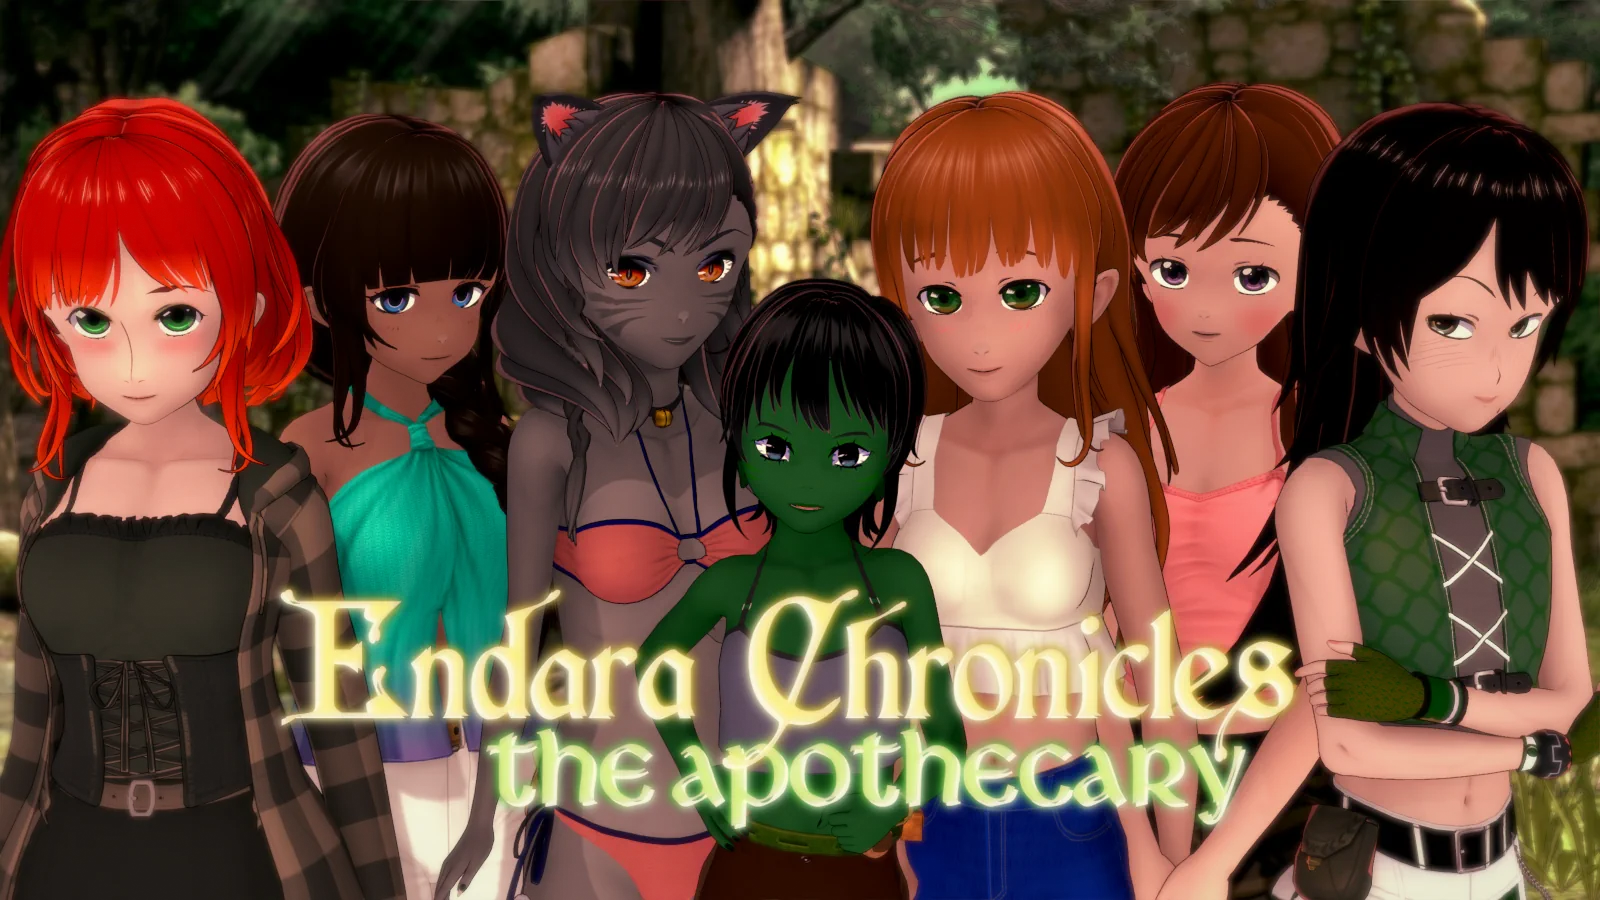 Endara Chronicles: The Apothecary by soniram